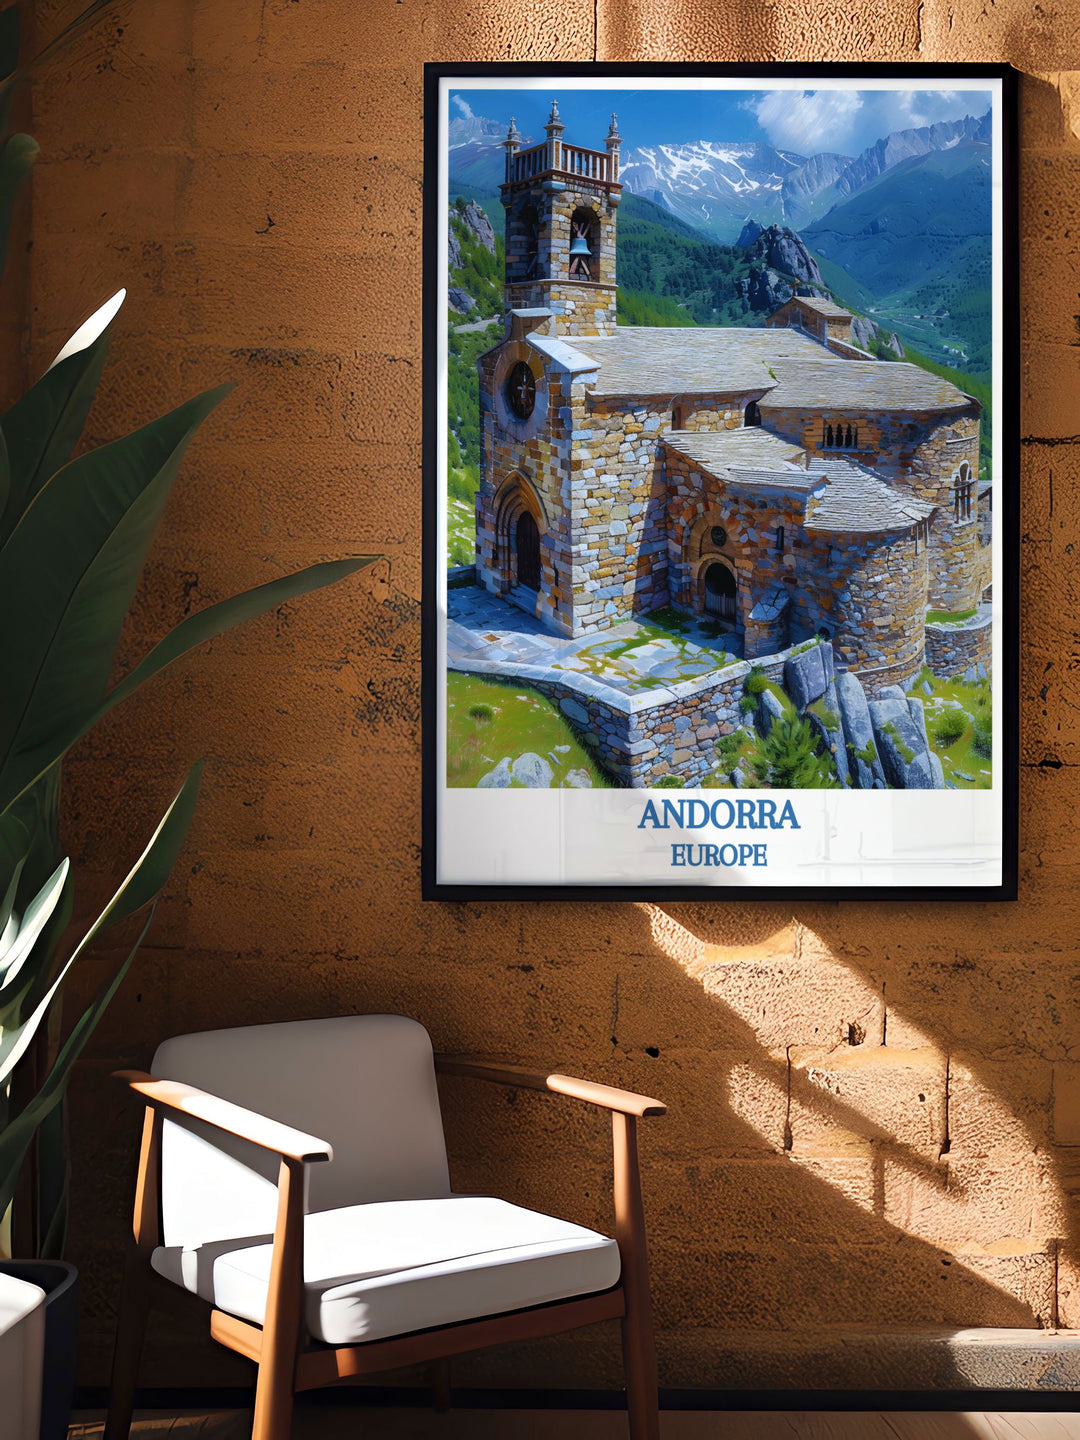 Travel poster of Andorras ski resorts, showcasing winter sports and mountain views around Sant Joan de Caselles Church.